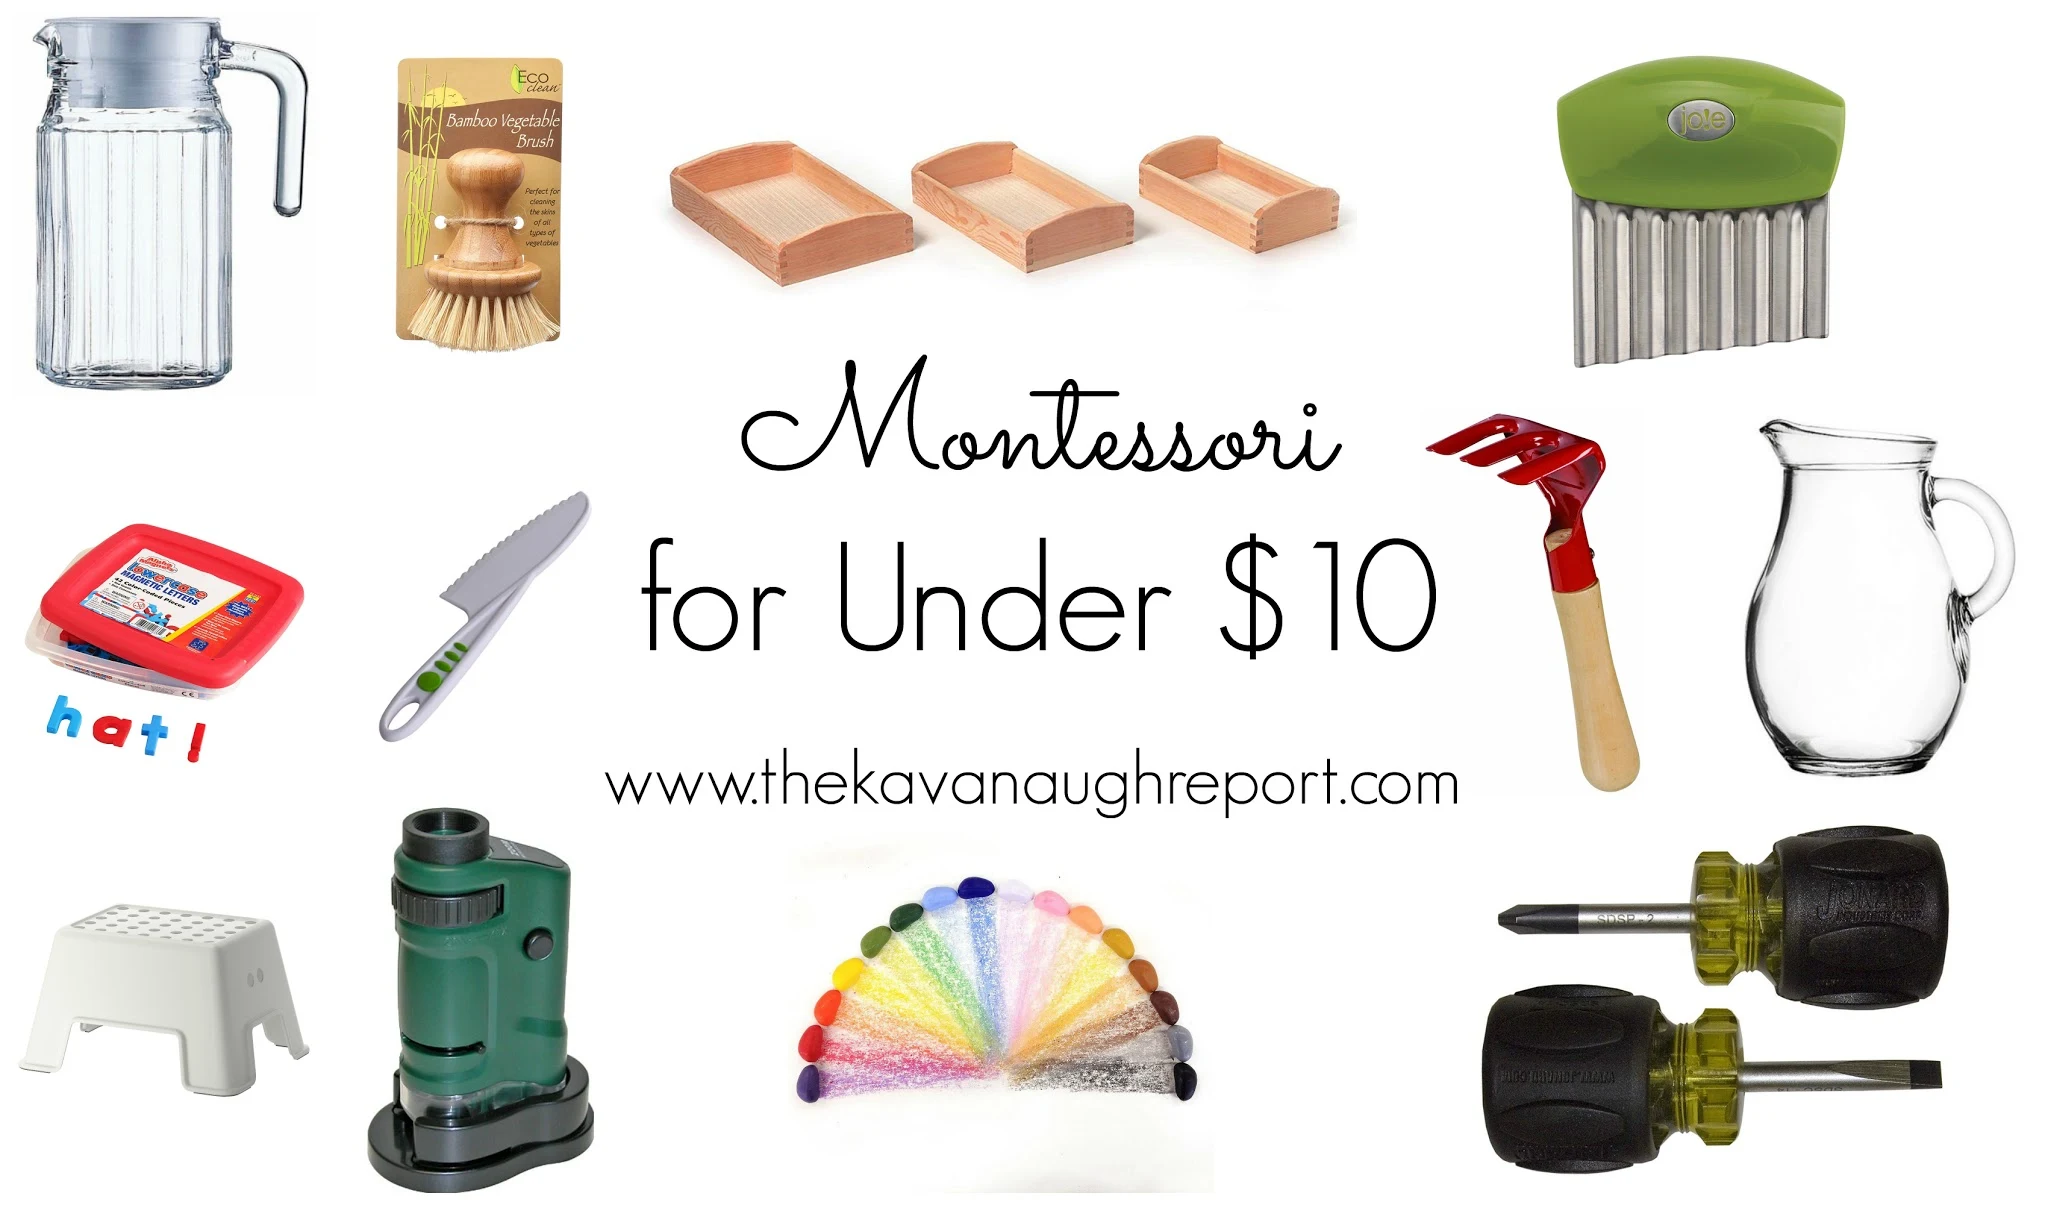 Montessori and Montessori friendly ideas costing less than $10